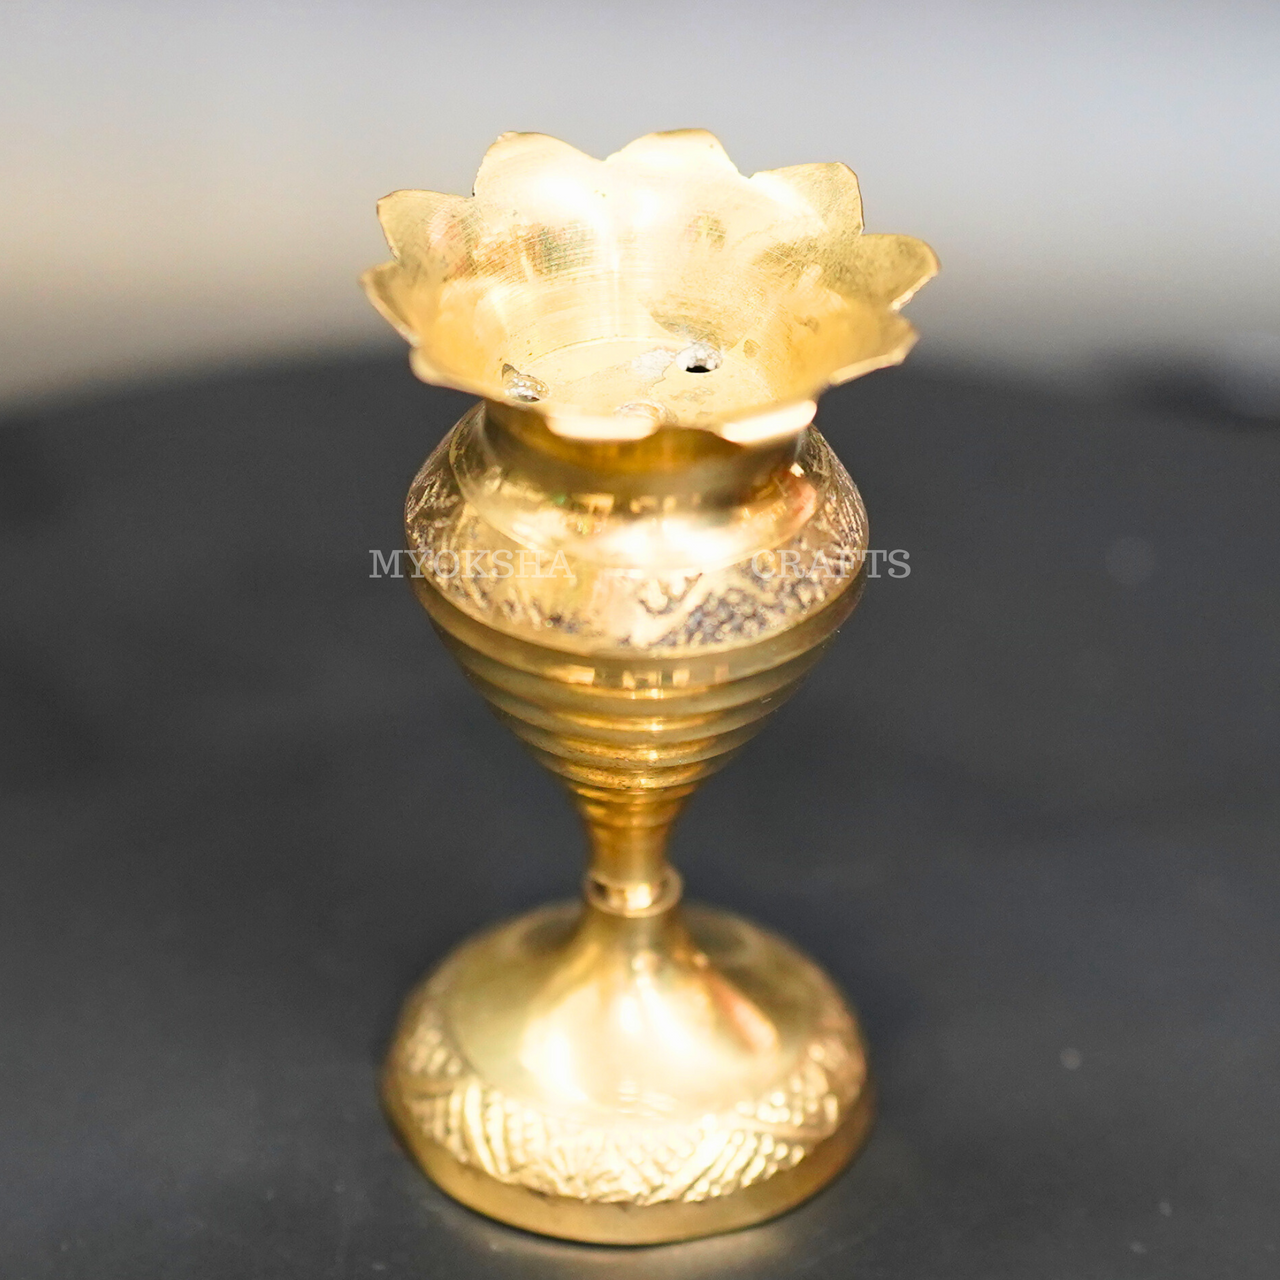 Brass Vase-Shaped Agarbatti Holder - 1